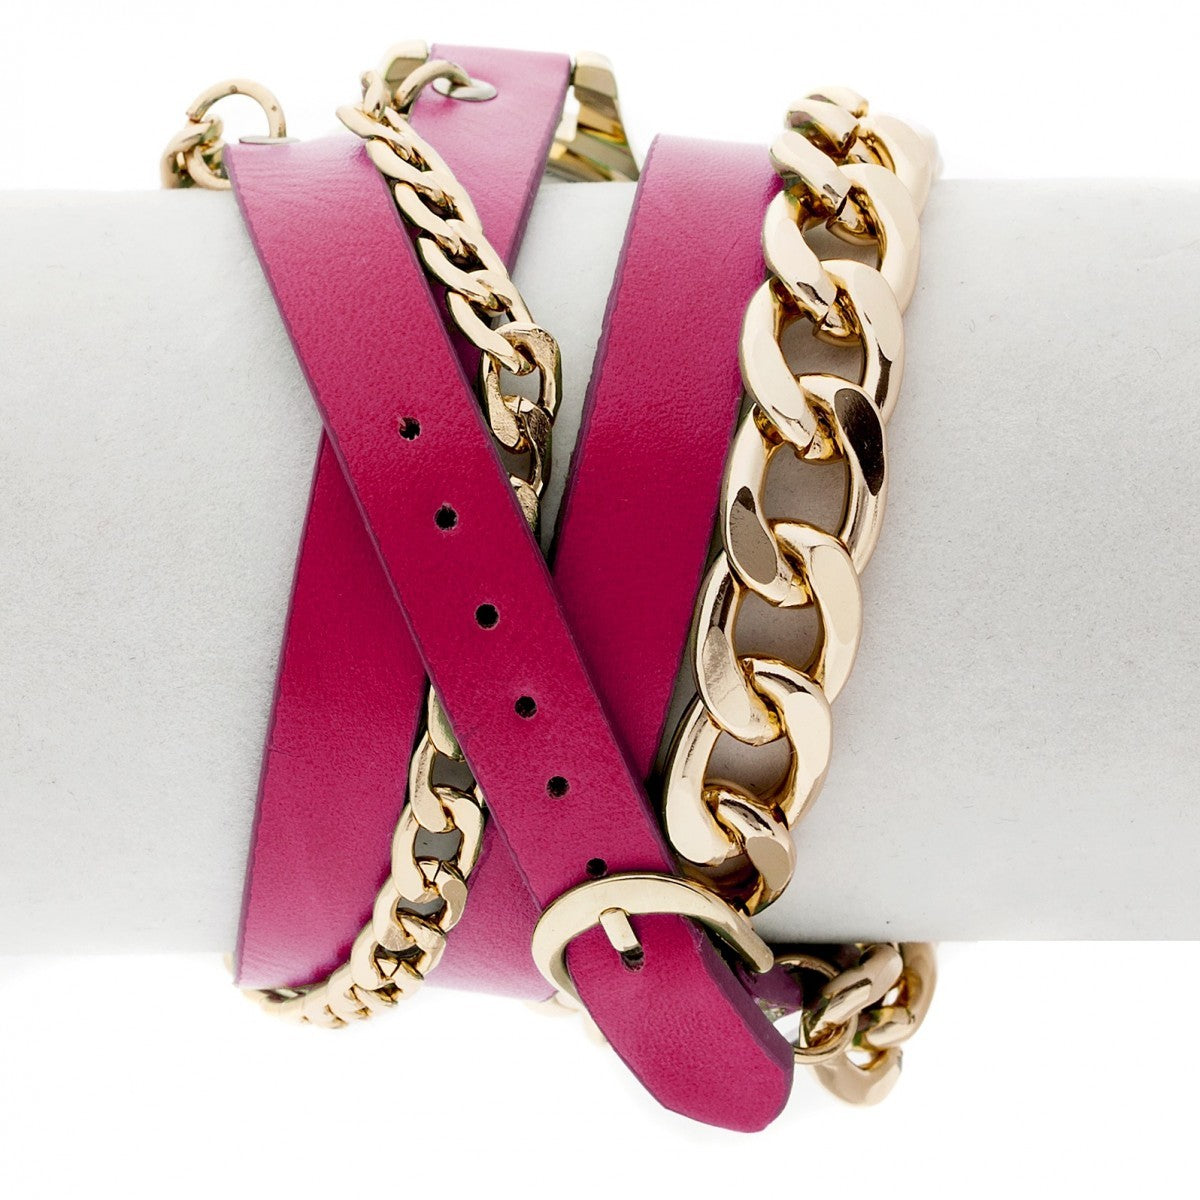 Boum Emballage Bracelet Multi-Wrap Leather-Band Watch - Gold/Pink - BOUBM3801